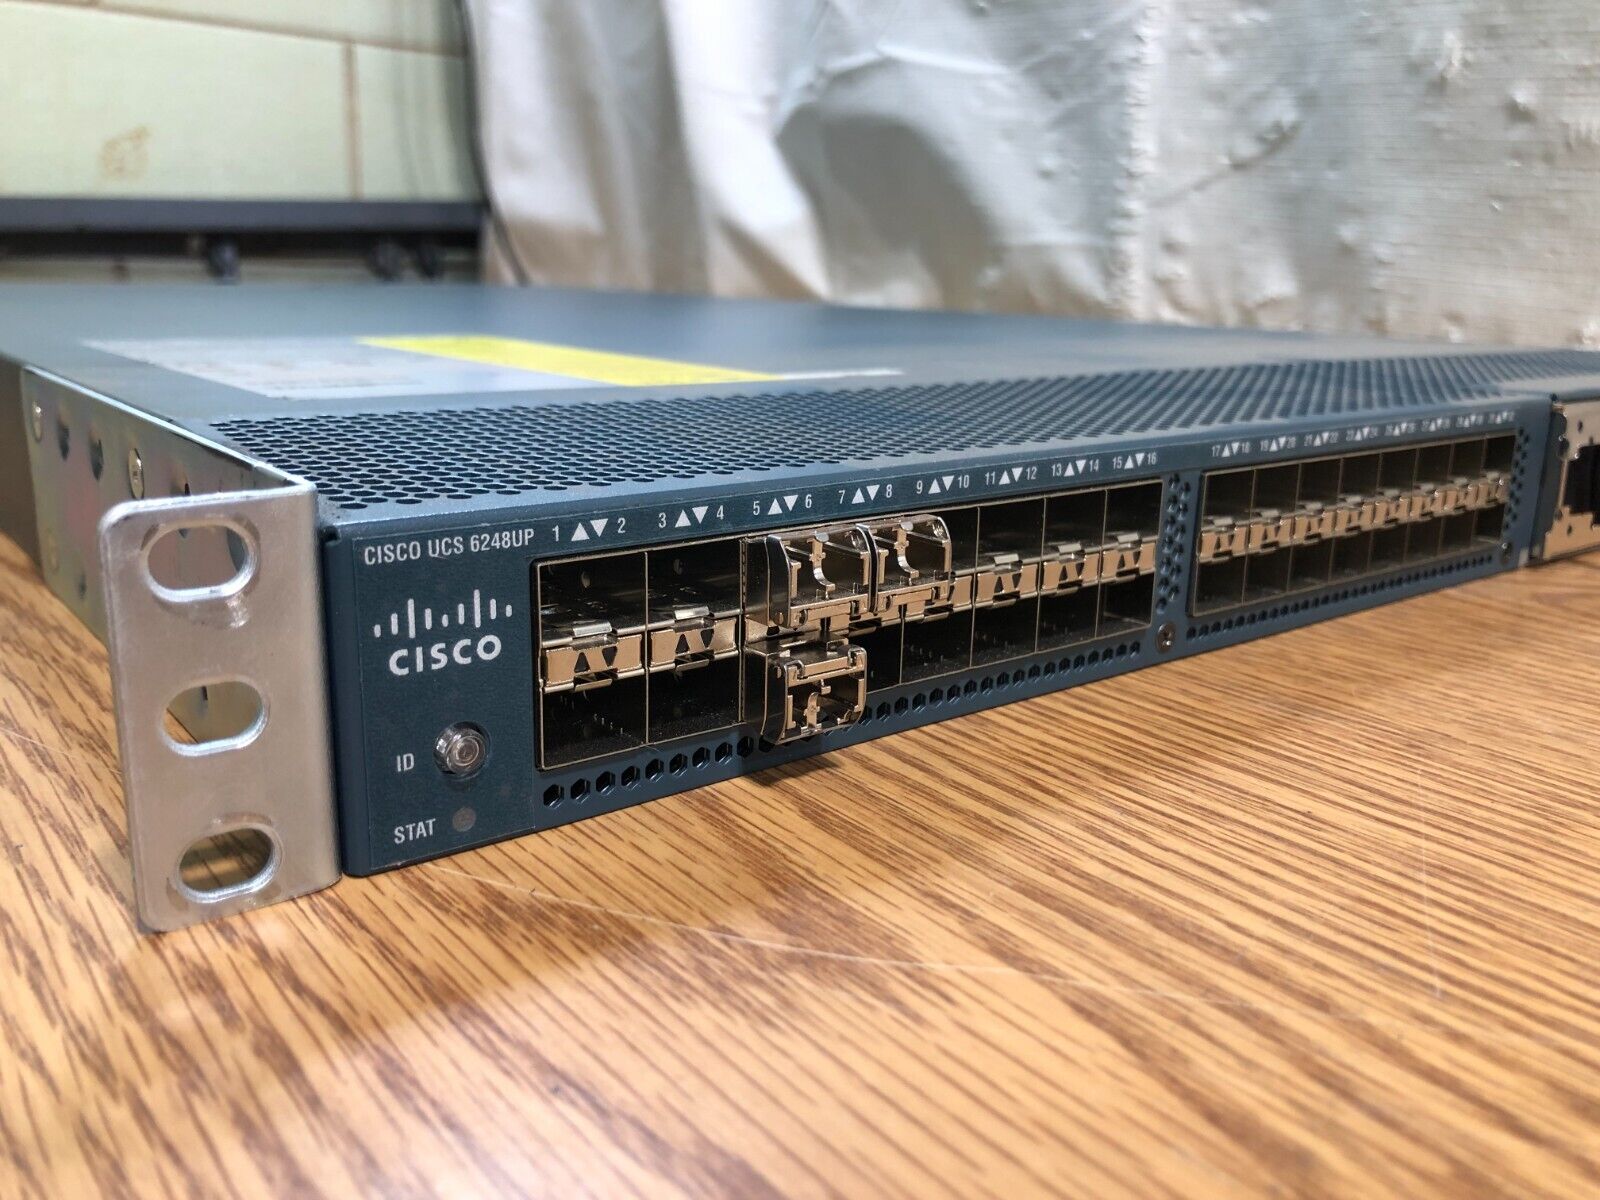 Cisco UCS-FI-6248UP 32Port 10Gb Fabric Interconnect Switch Dual PSU